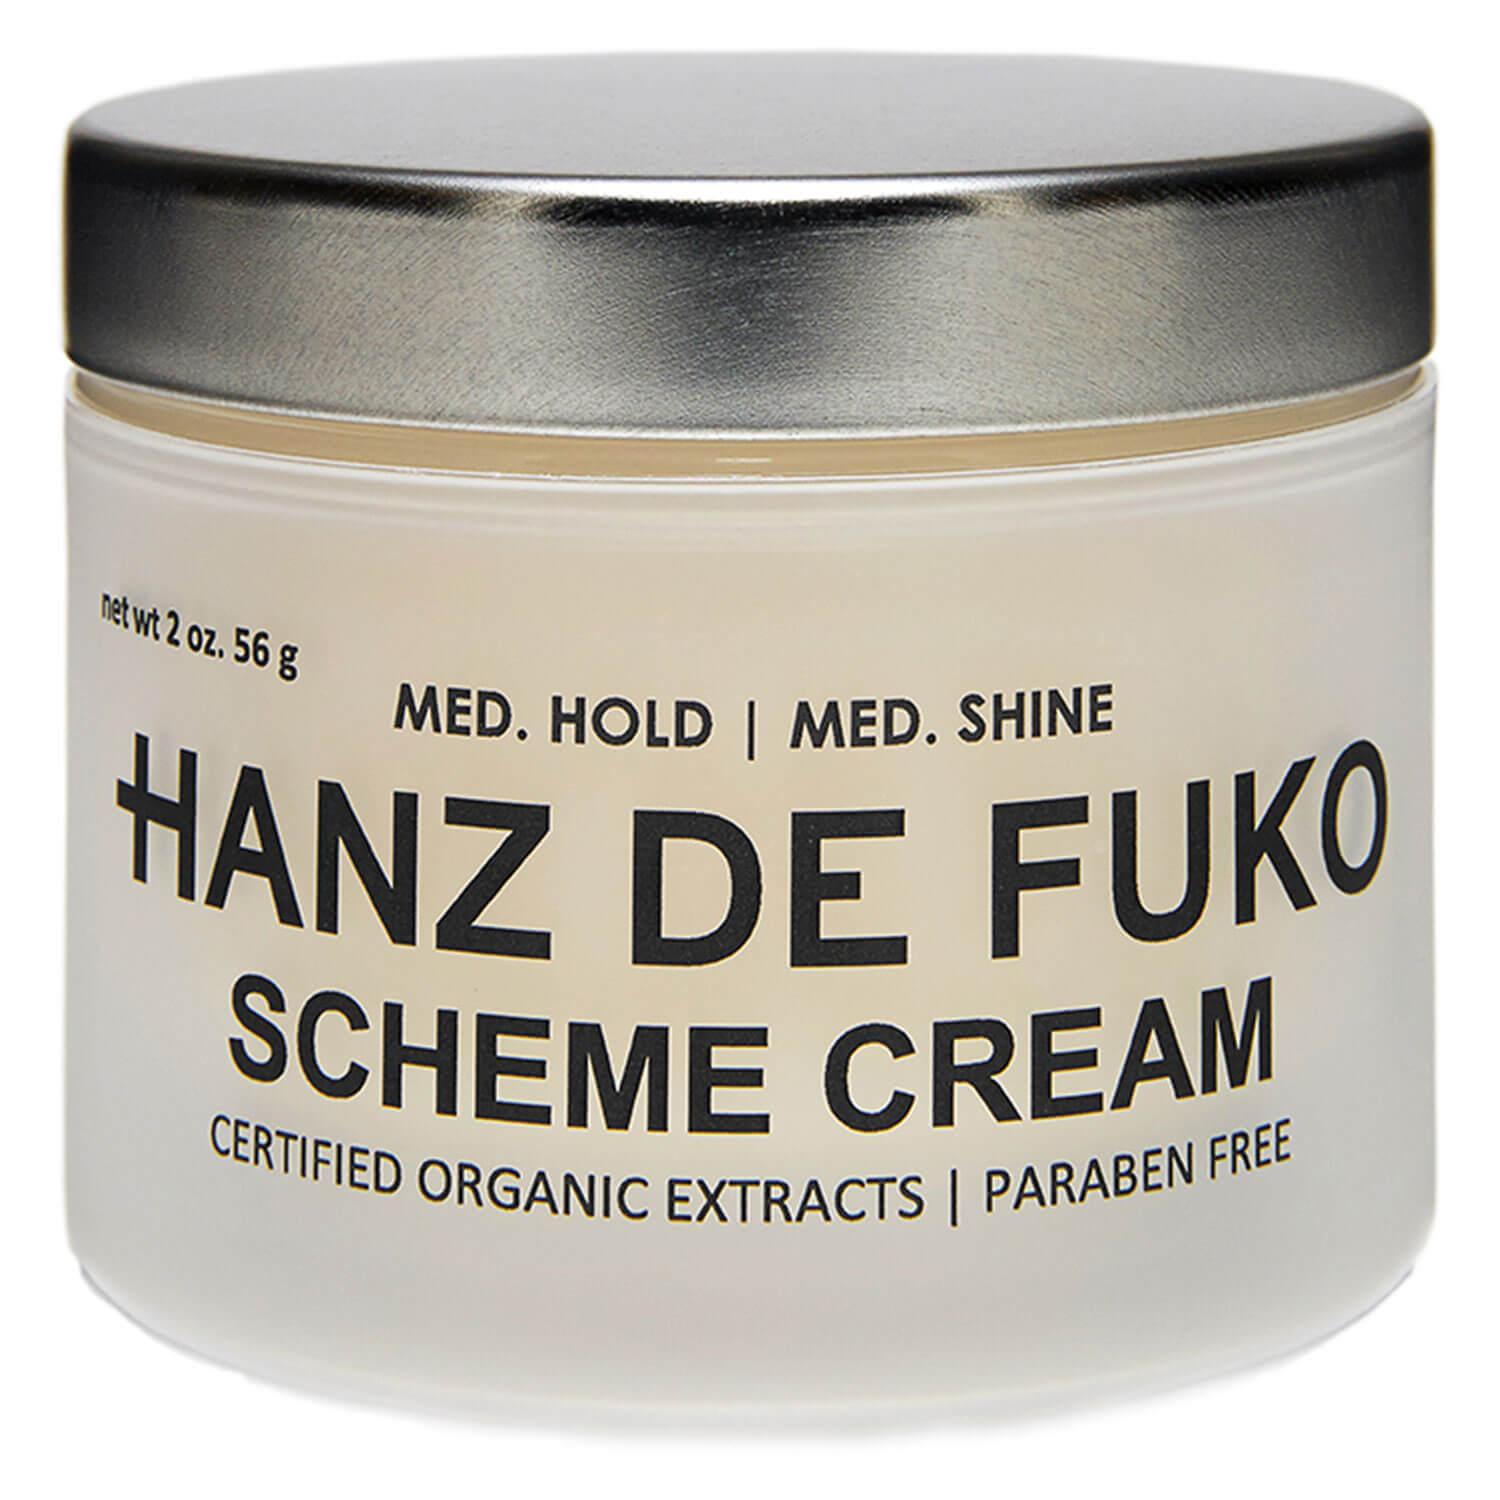 HANZ DE FUKO - Scheme Cream